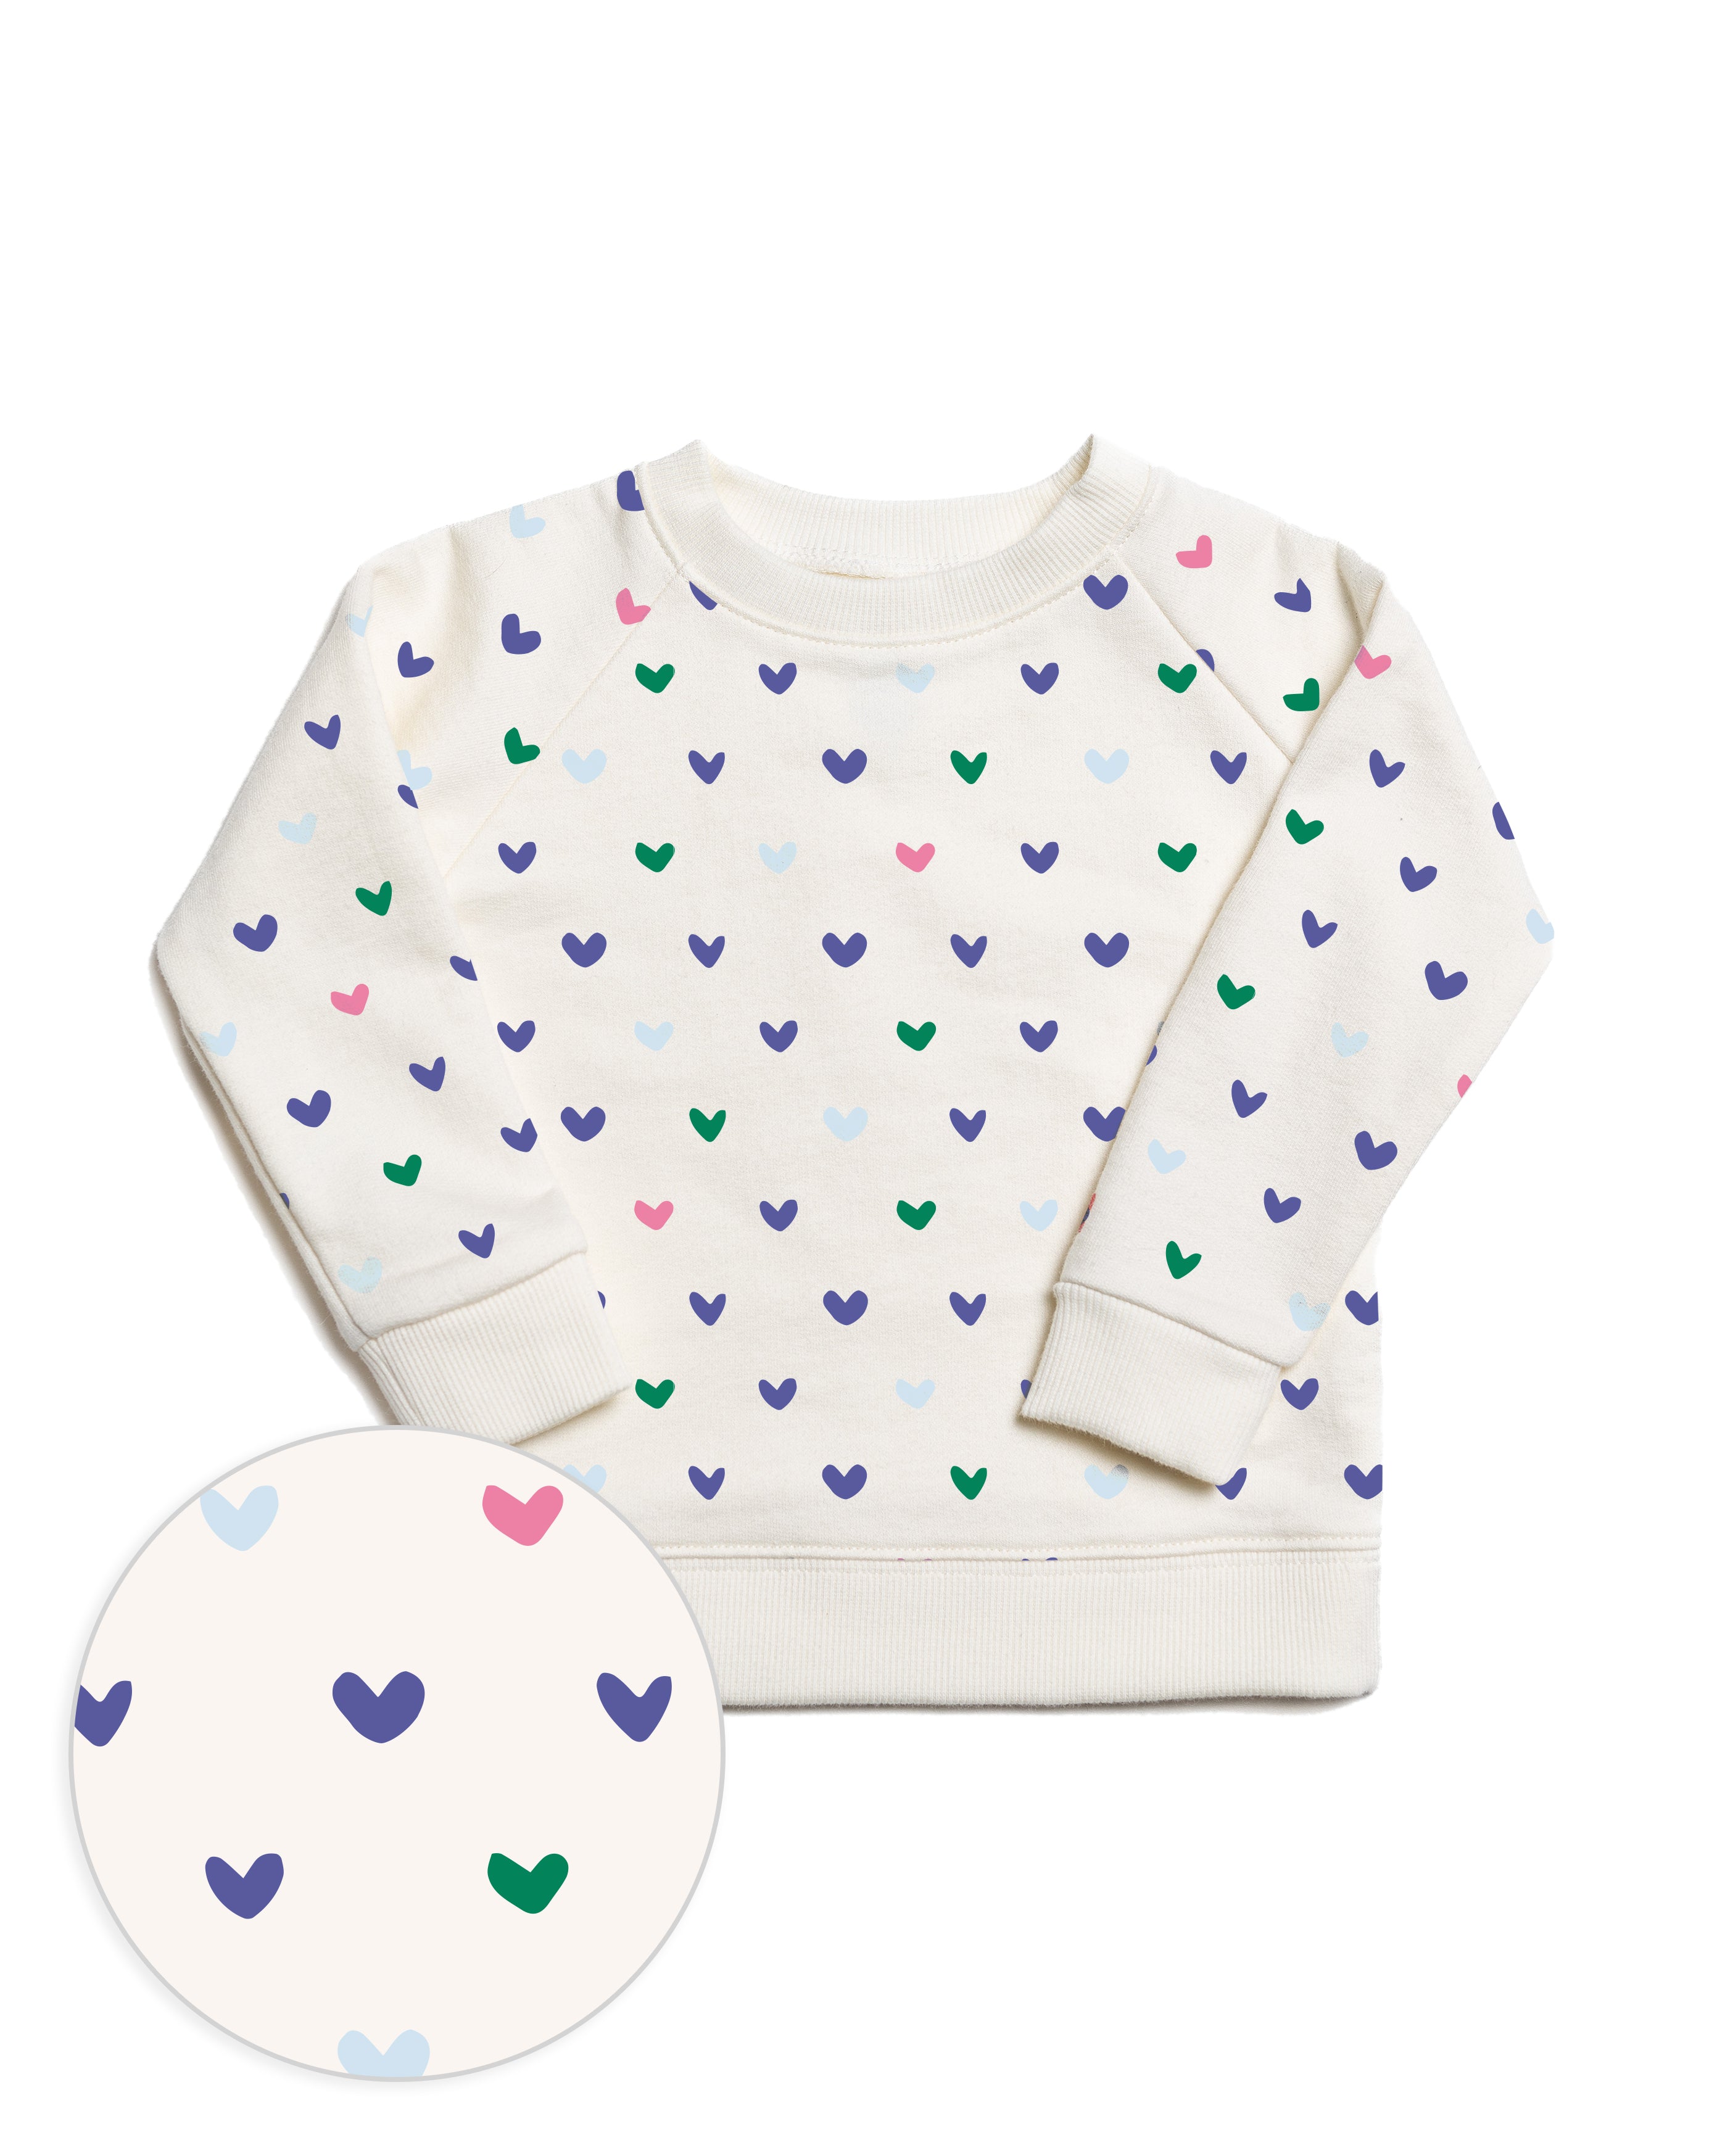 The Organic Printed Pullover Sweatshirt [Jelly Bean Hearts on Cream]